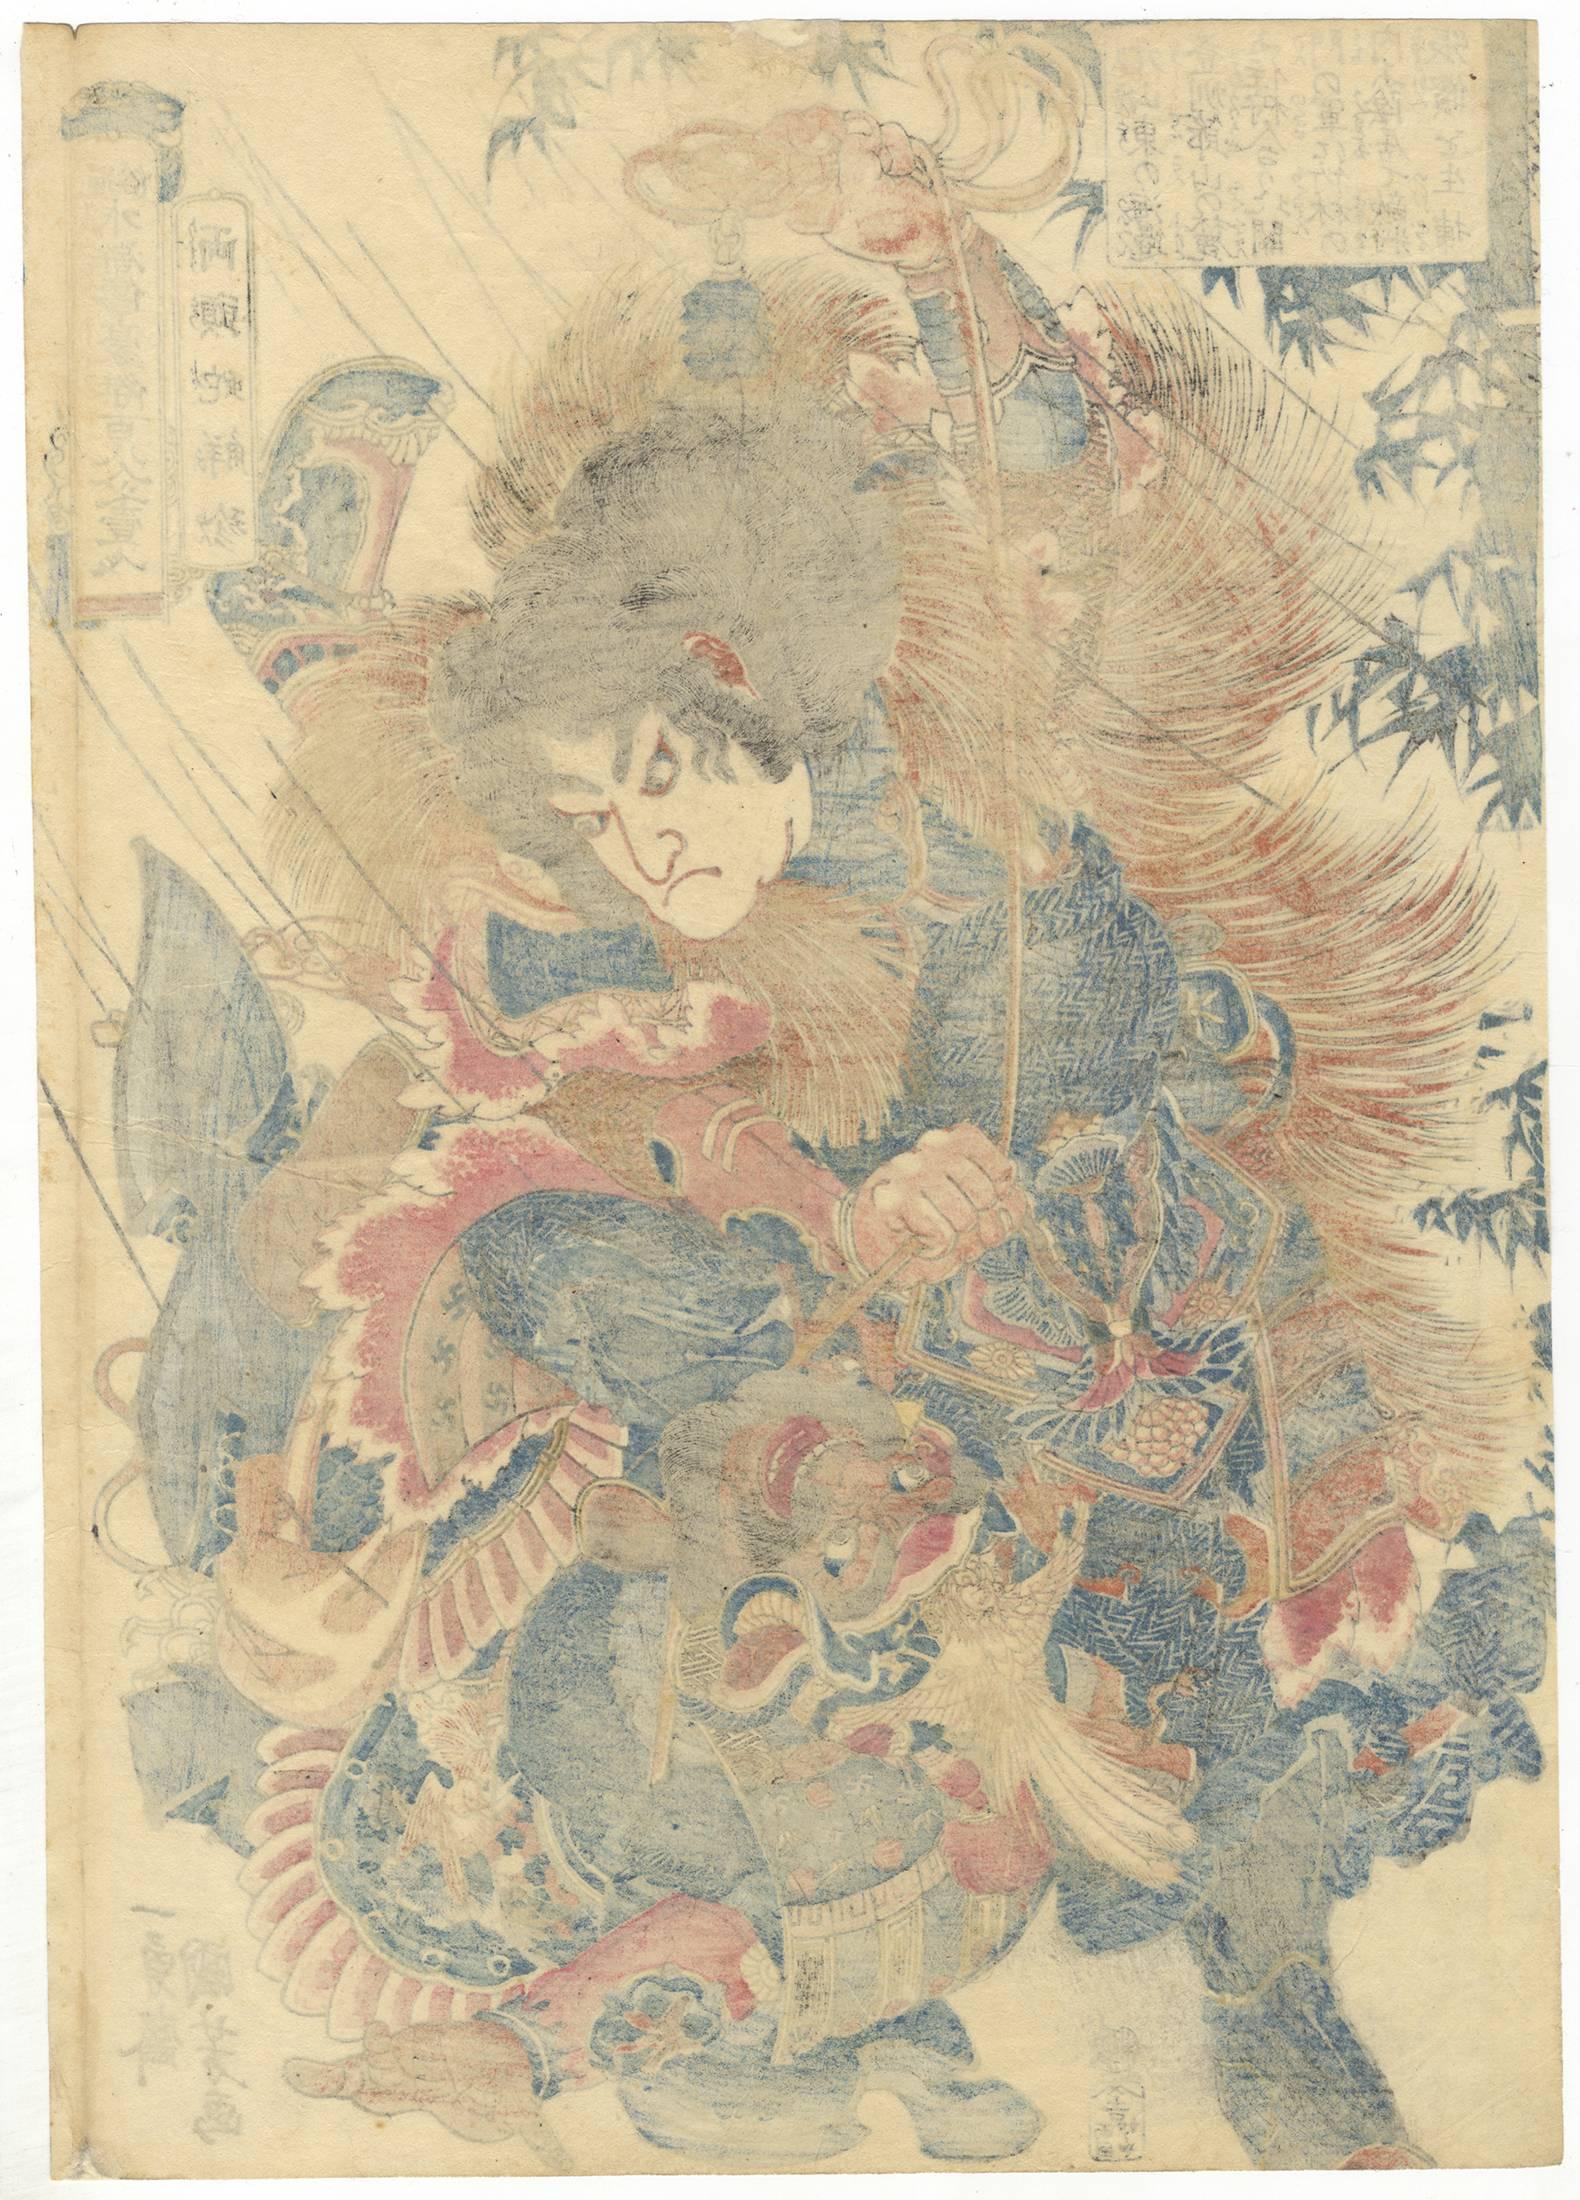 Artist: Kuniyoshi Utagawa (1797-1861)
Title: Ryotoda Kaichin (Xie Zhen)
Series: 'The 108 Heroes of the Tale of Suikoden' 
Publisher: Kaga-ya Kichibei
Date: 1827-1830

Kuniyoshi's commercial and artistic success came in 1827 with the series